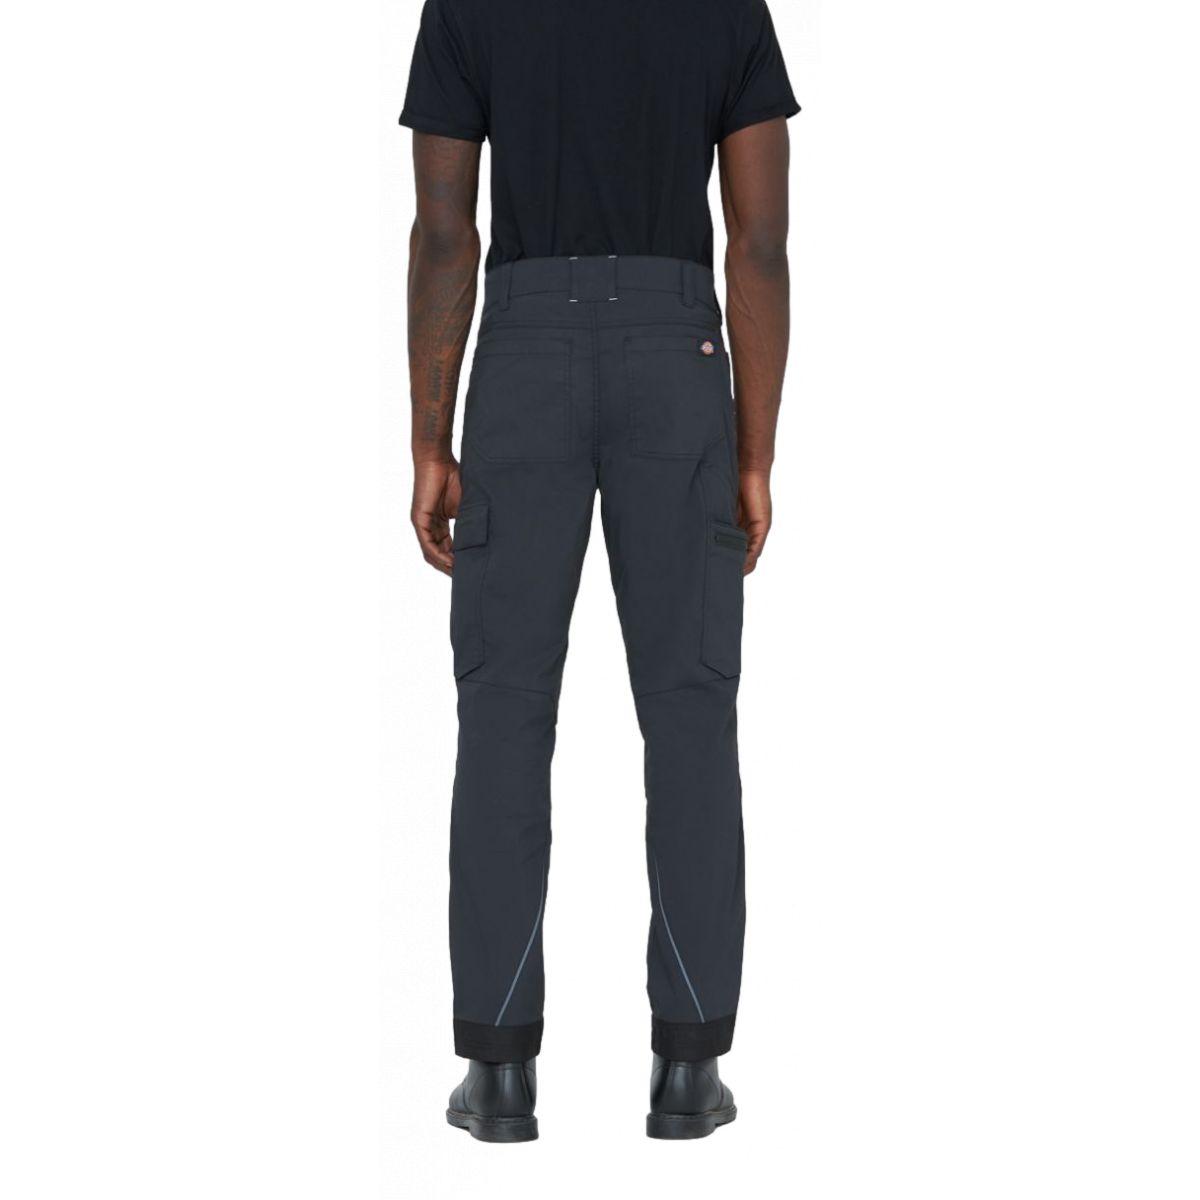 Pantalon léger Flex Noir - Dickies - Taille 46 3